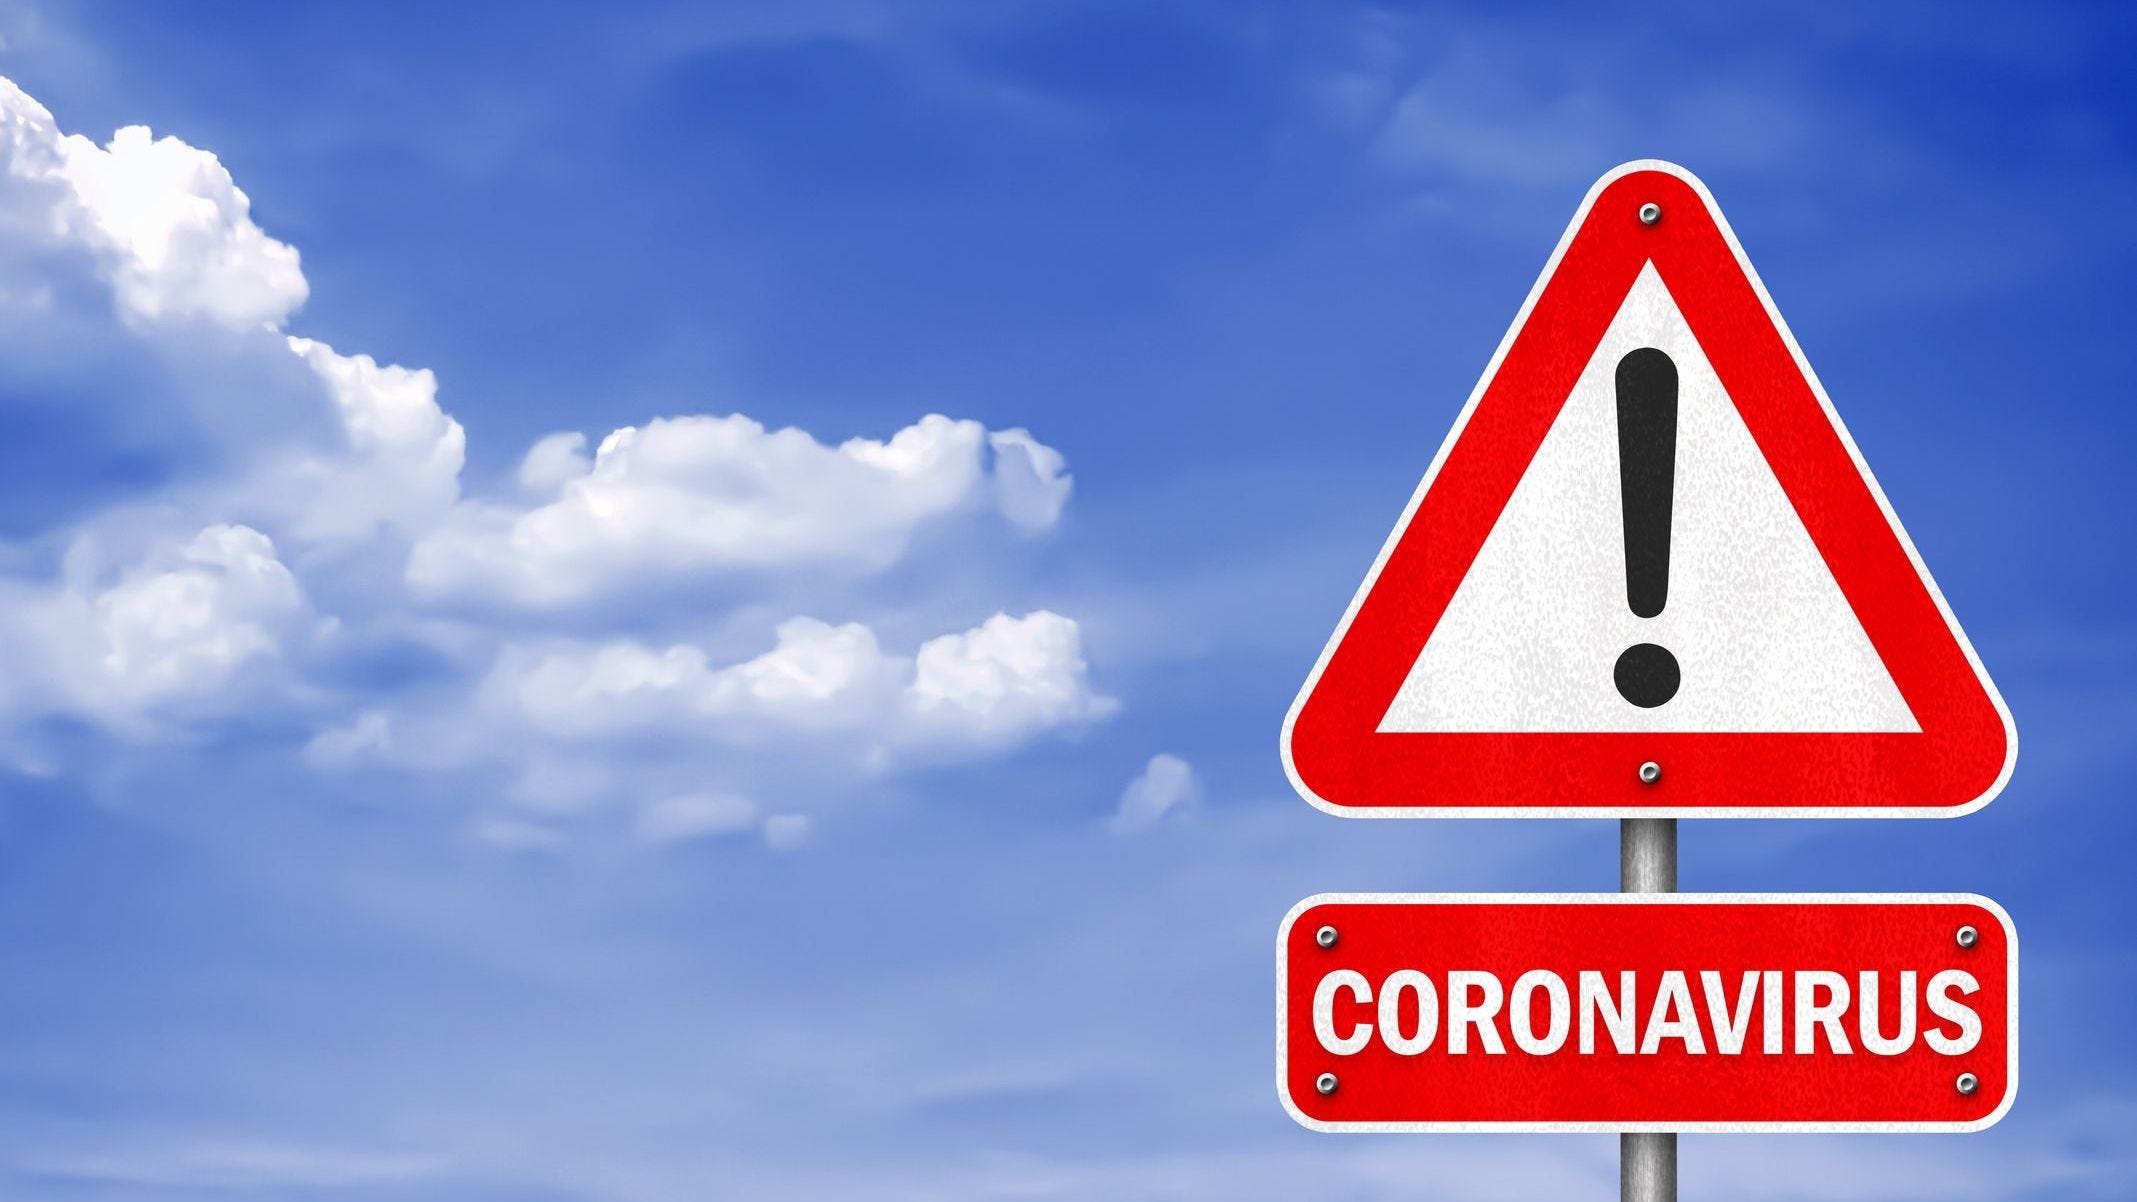 High Quality Coronavirus Warning Blank Meme Template